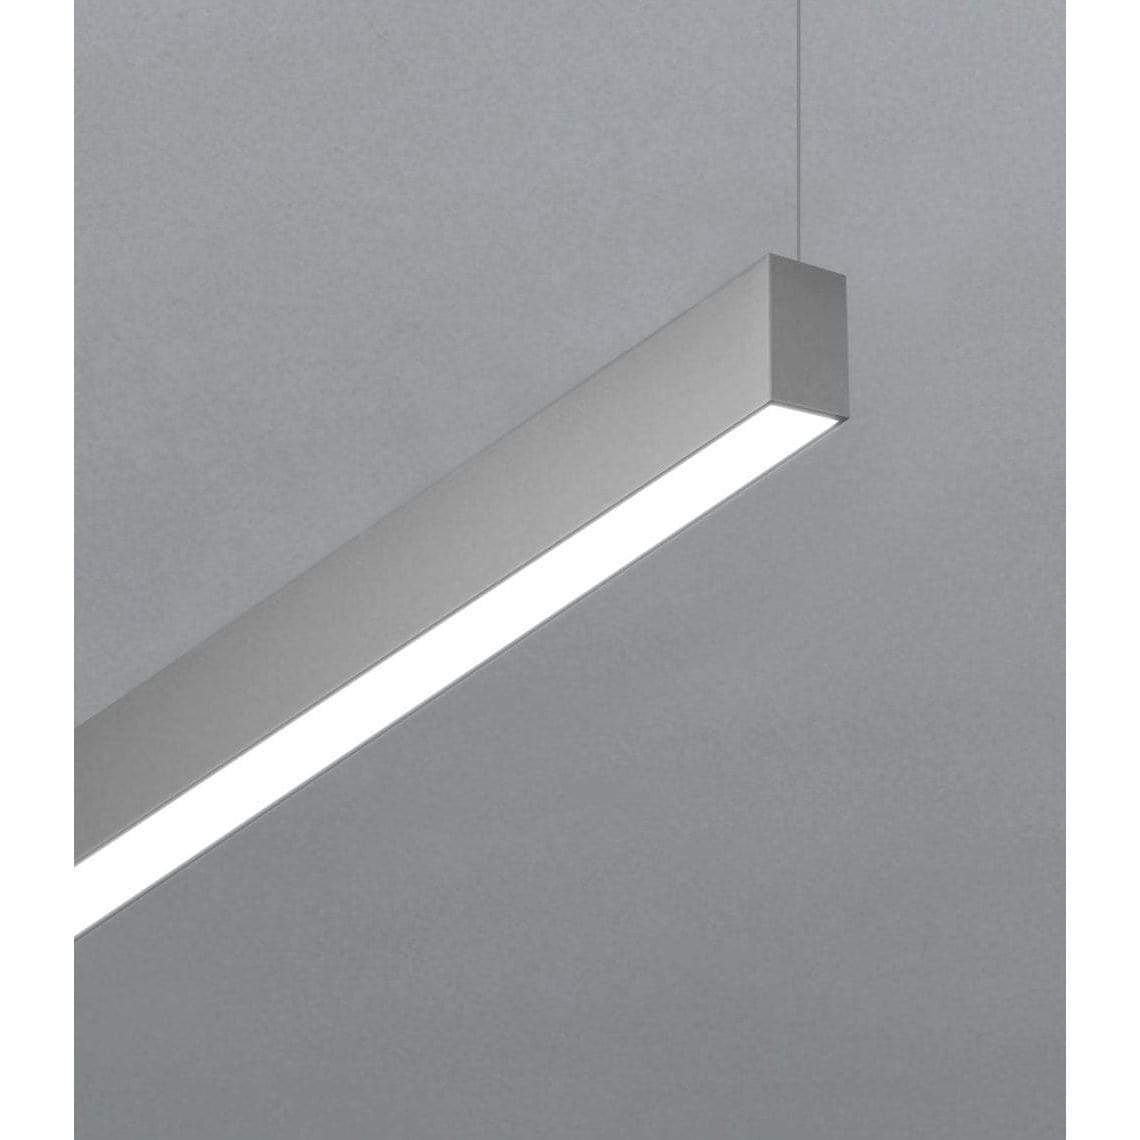 POE Texas Lighting Denton Suspended Linear PoE Lights - Sample 1.3" x 4' Linear Diffuser 4 ft, 3000K (Surface)